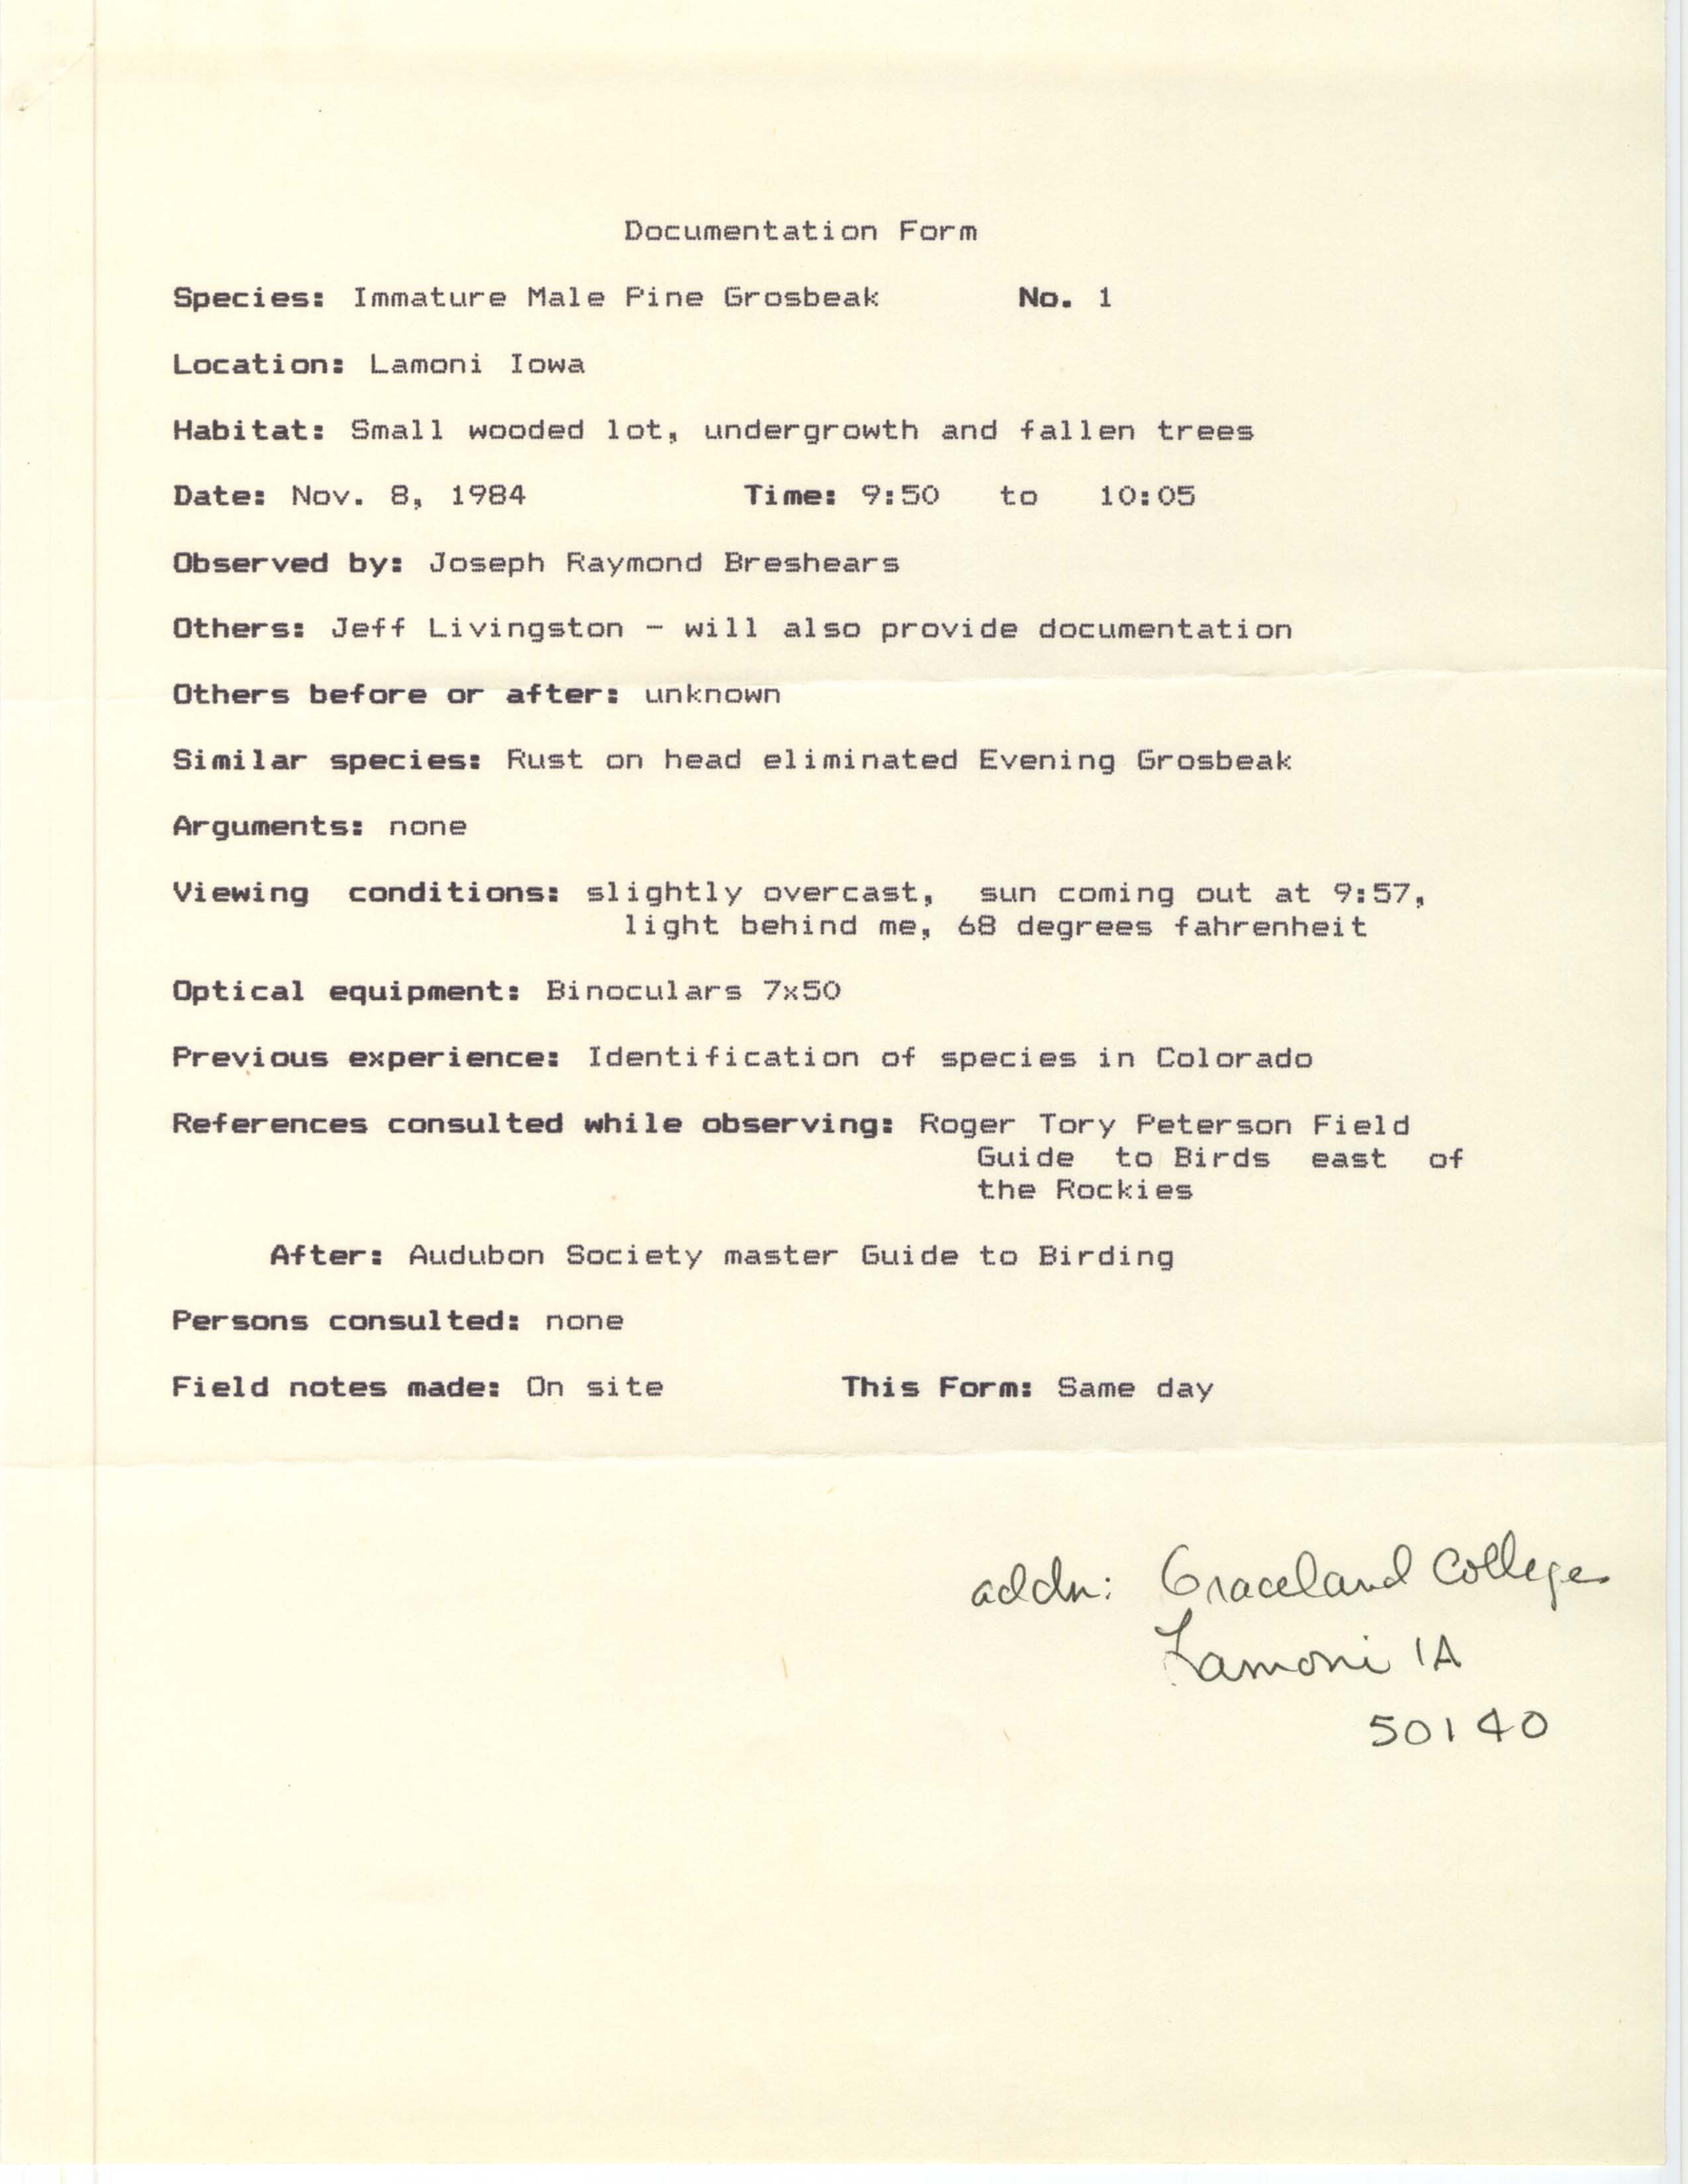 Rare bird documentation form for Pine Grosbeak at Lamoni in 1984